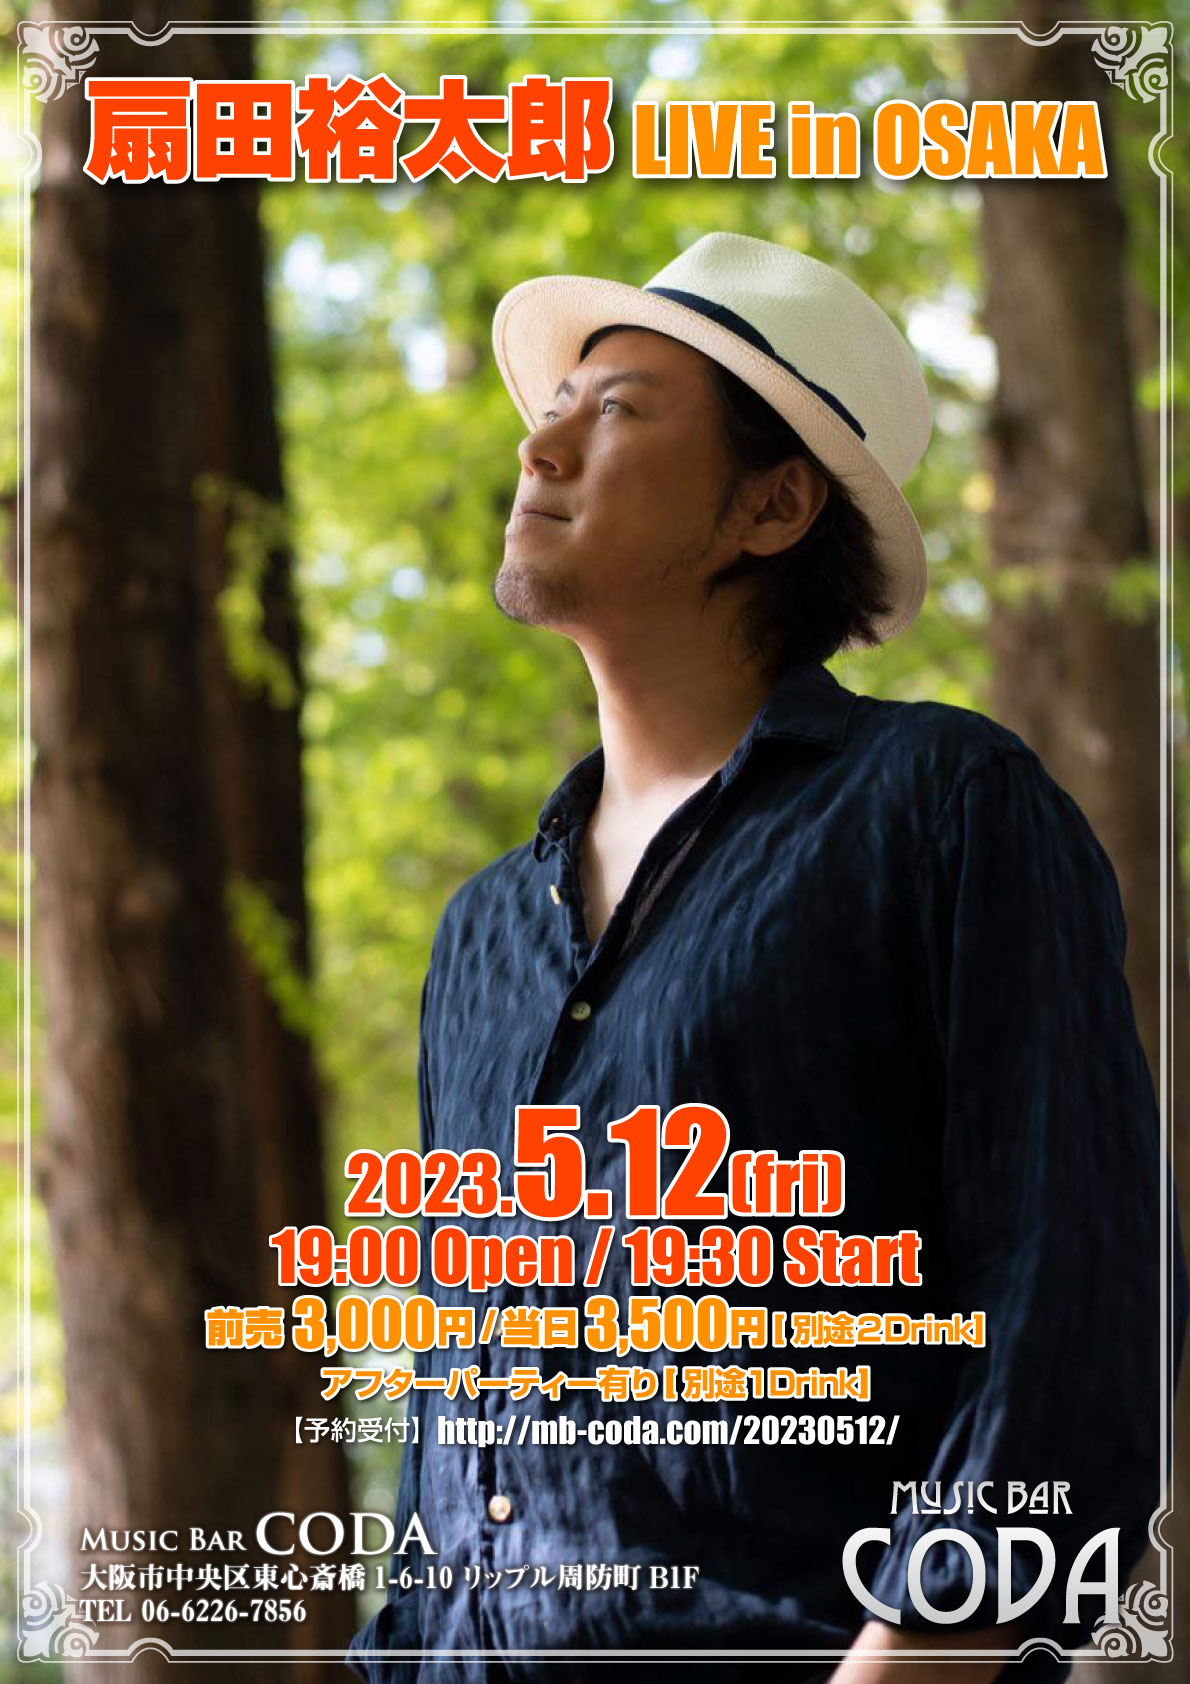 5/12(fri) 扇田裕太郎 LIVE in OSAKA【大阪 Music Bar CODA からLIVE配信】